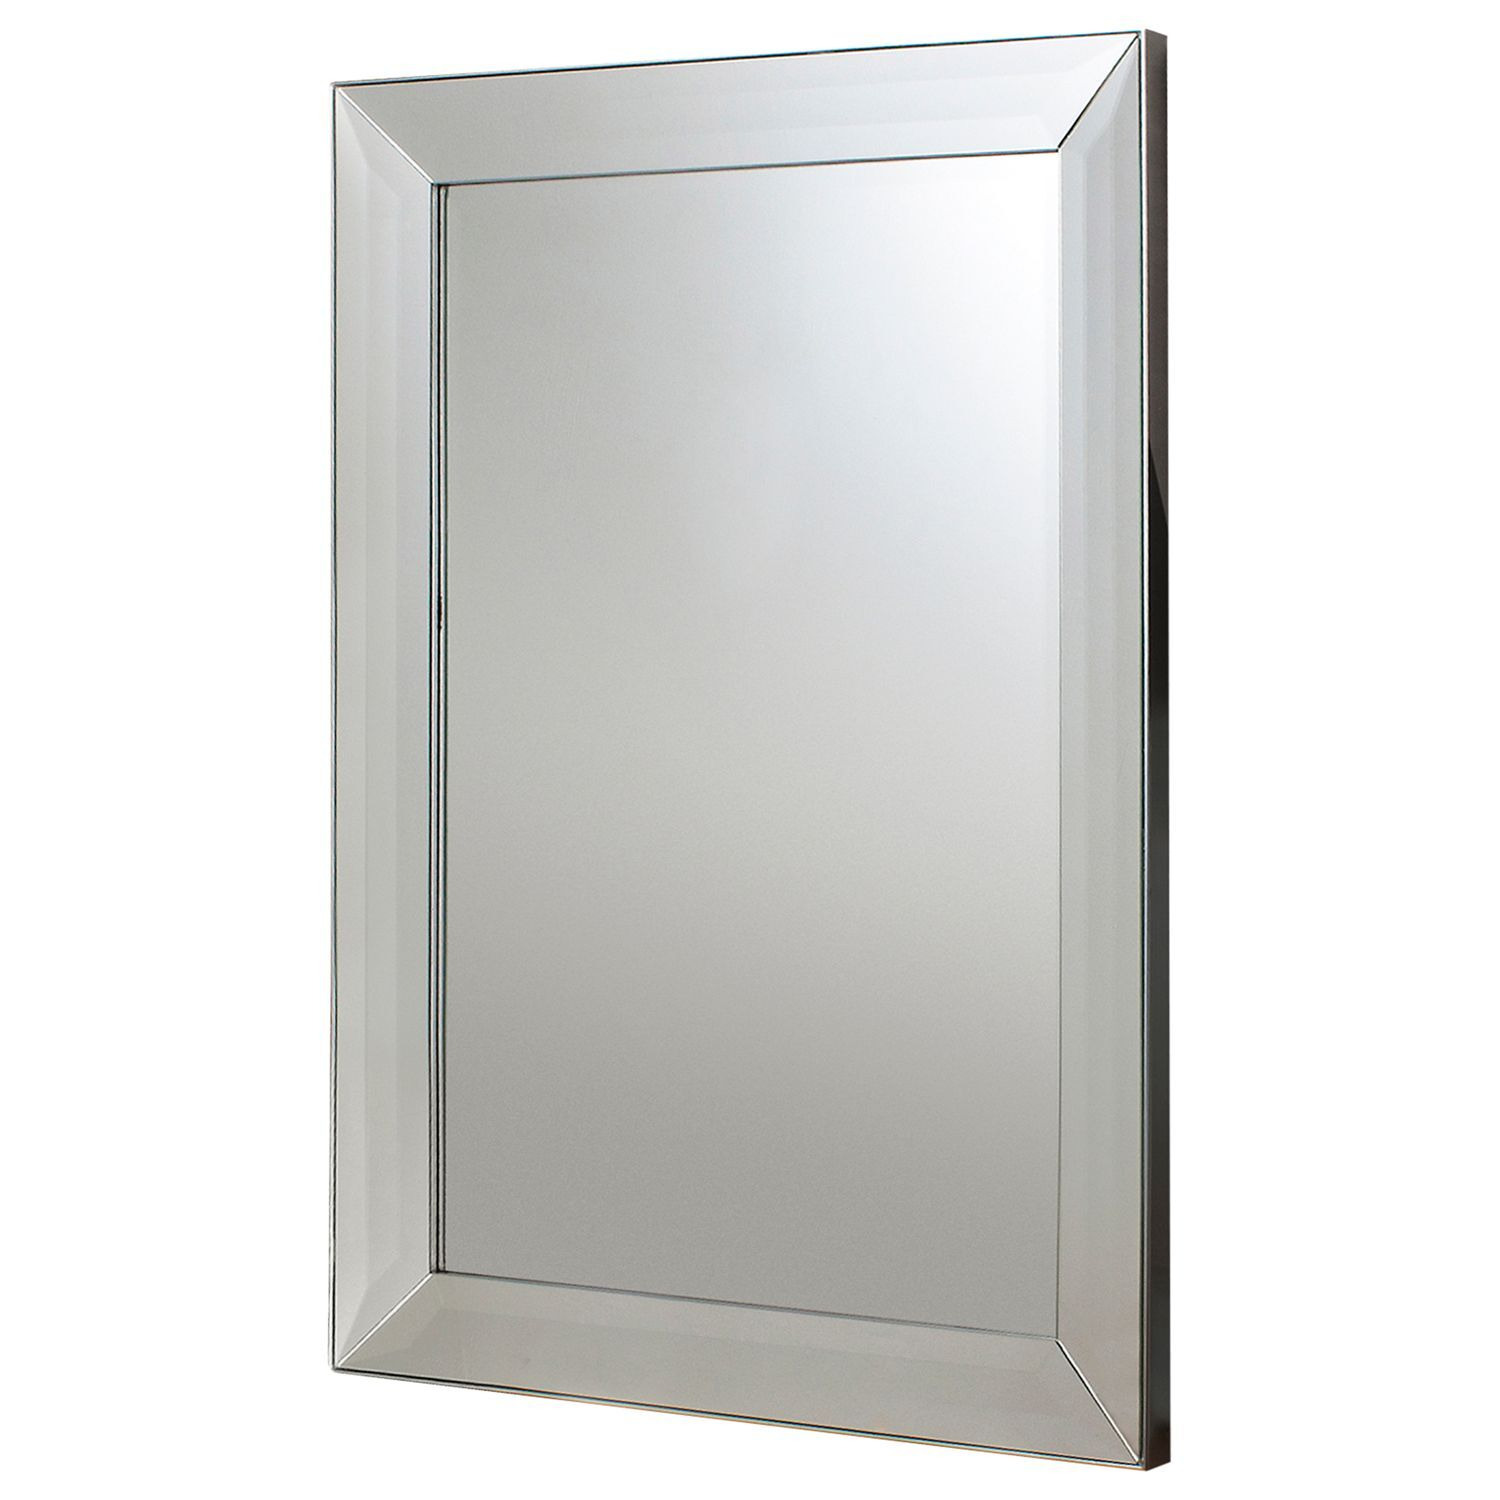 Gallery Direct Modena Rectangular Wall Mirror, Silver, 109 x 79cm - image 1